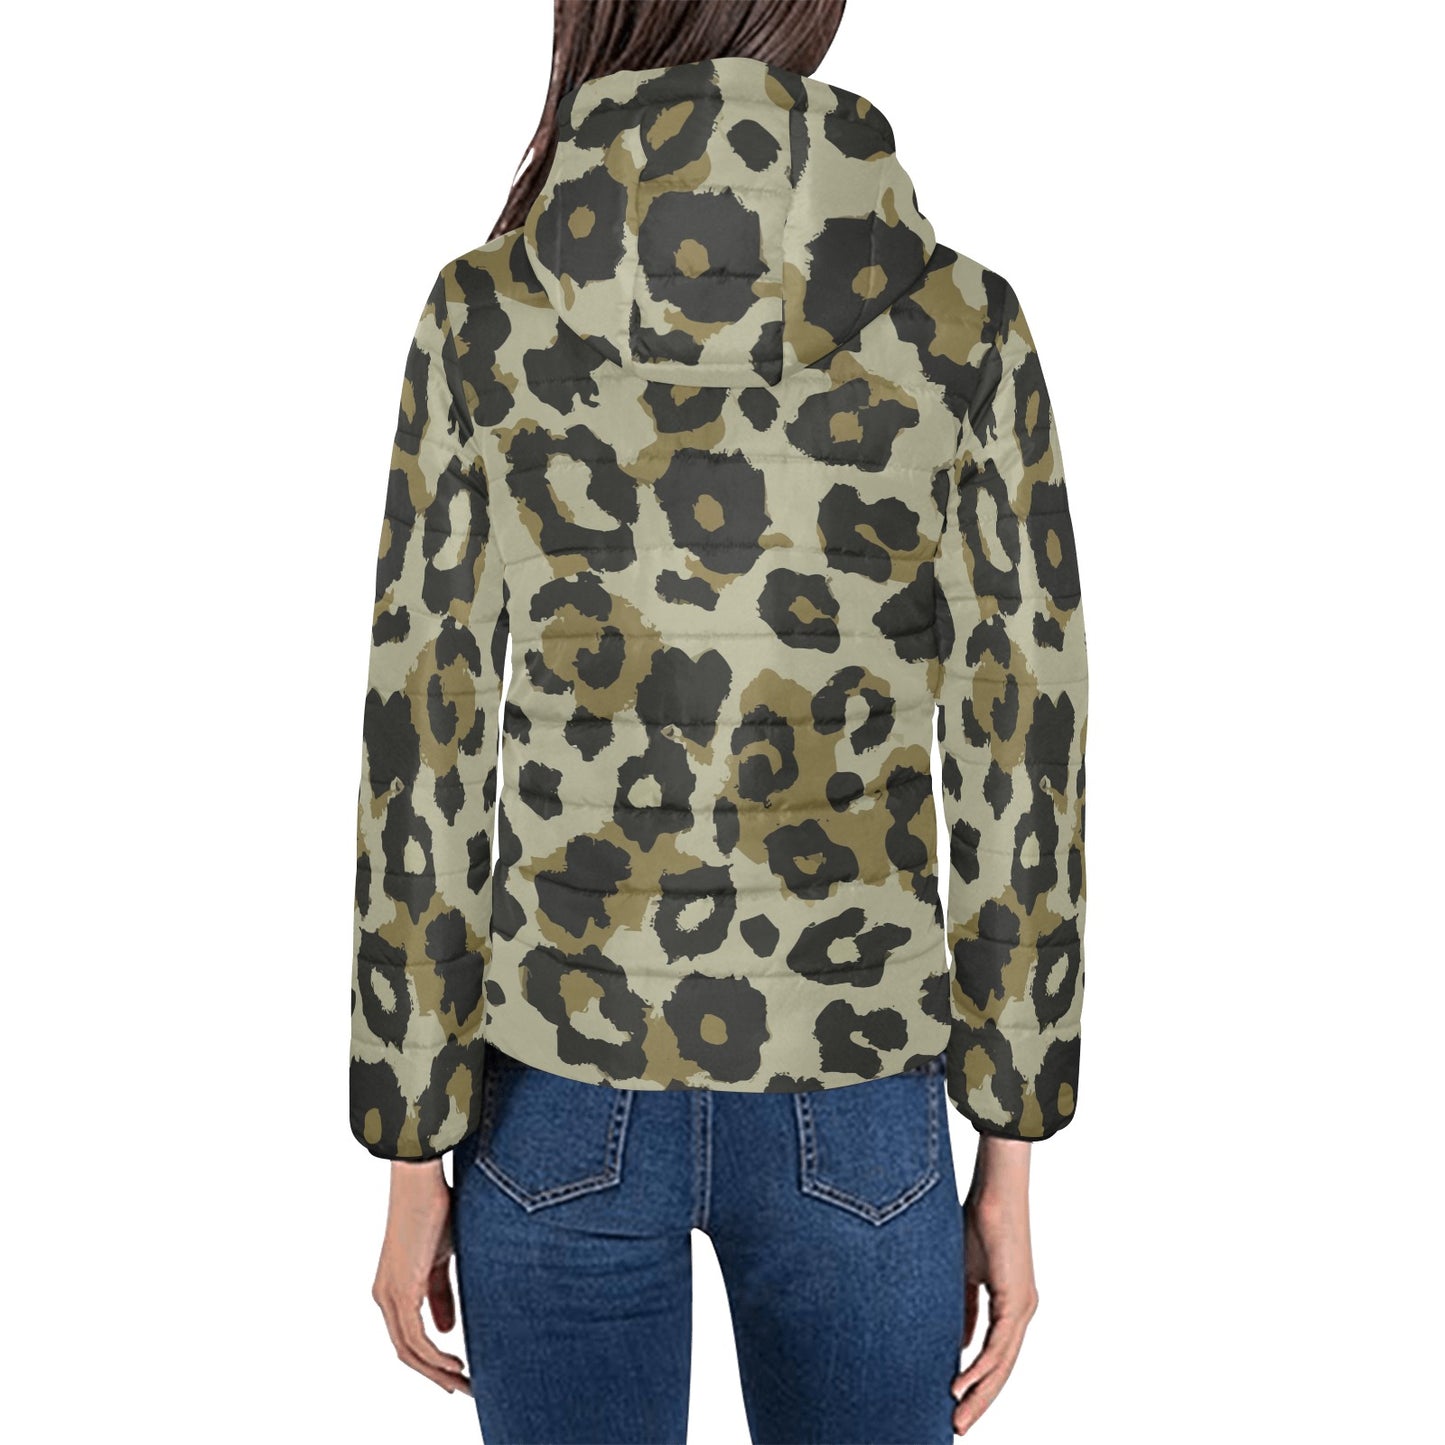 Vampire Art Grunge Animal Patterned Women's Padded Hooded Jacket - Grunge Khaki Leopard